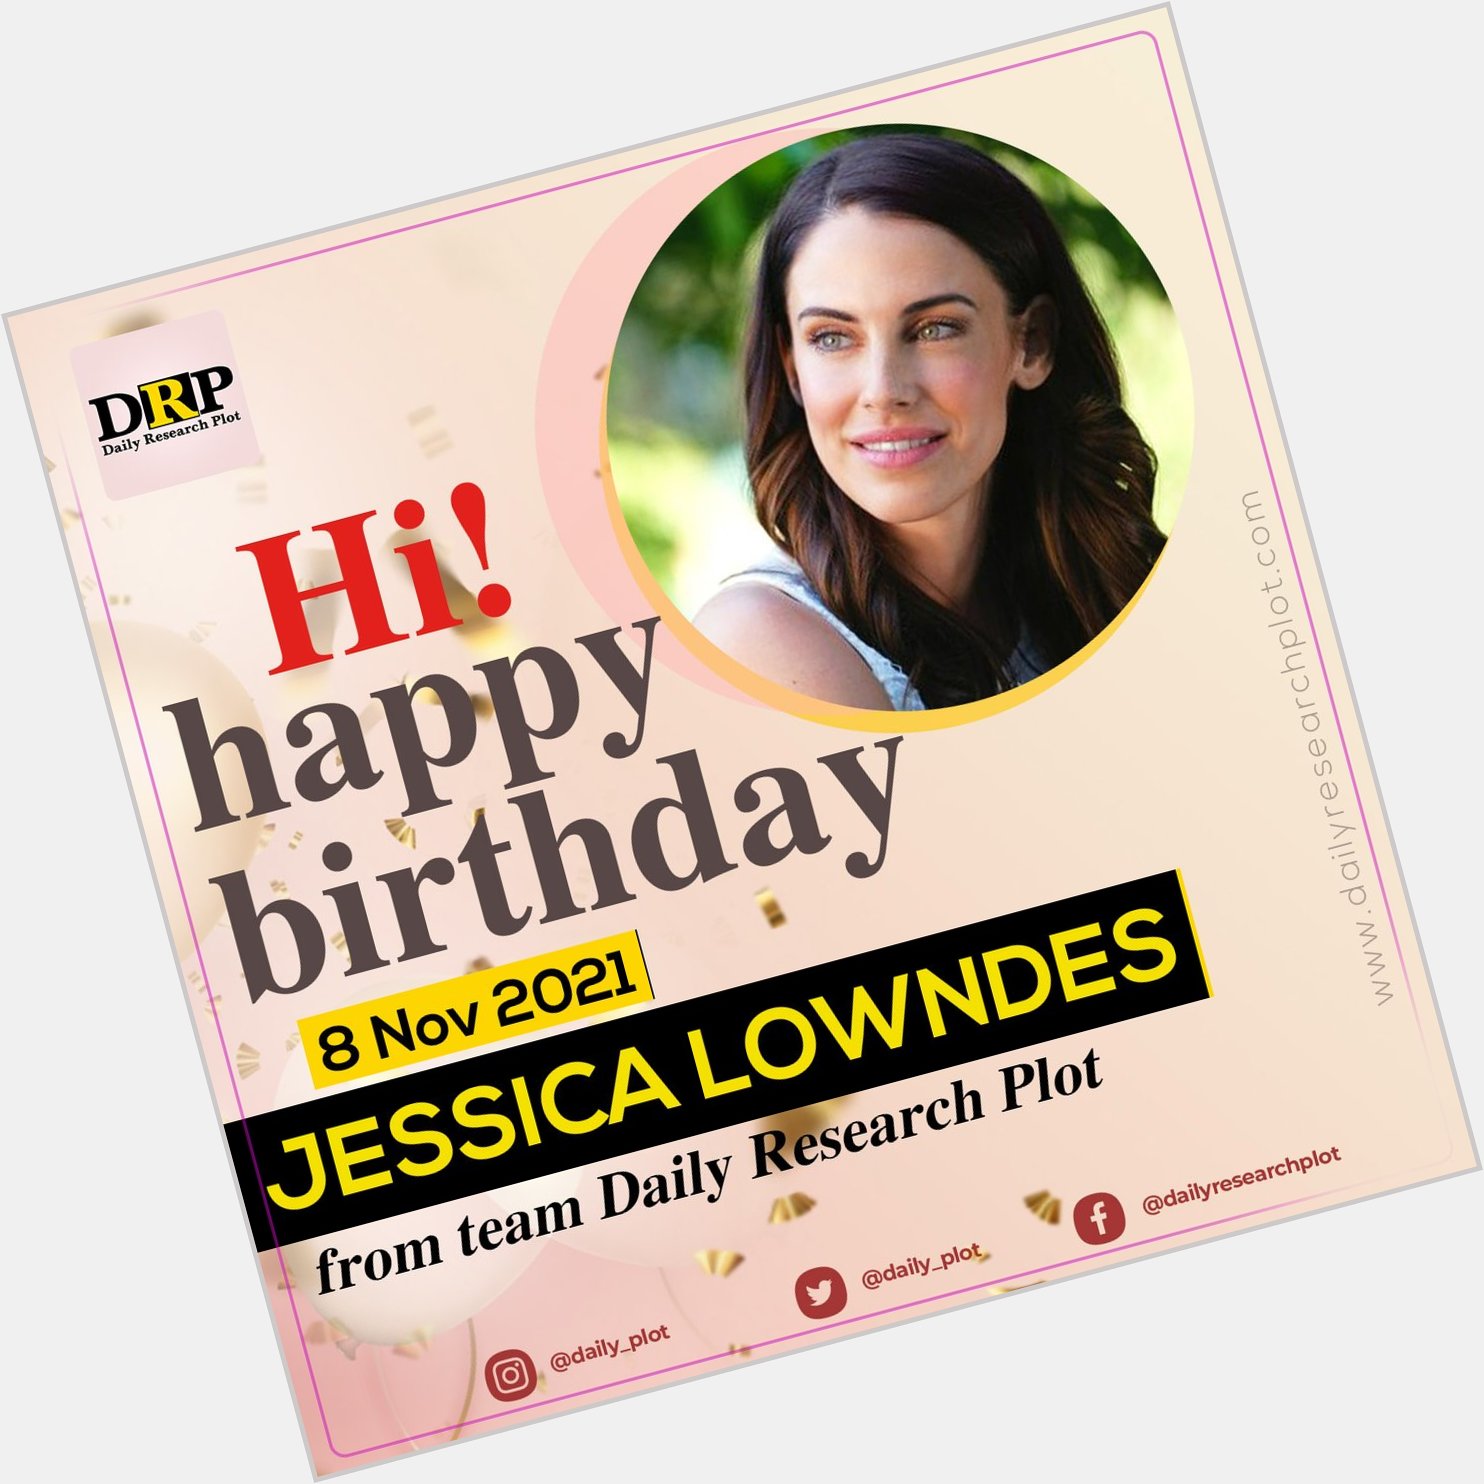 Happy Birthday!
Jessica Lowndes   